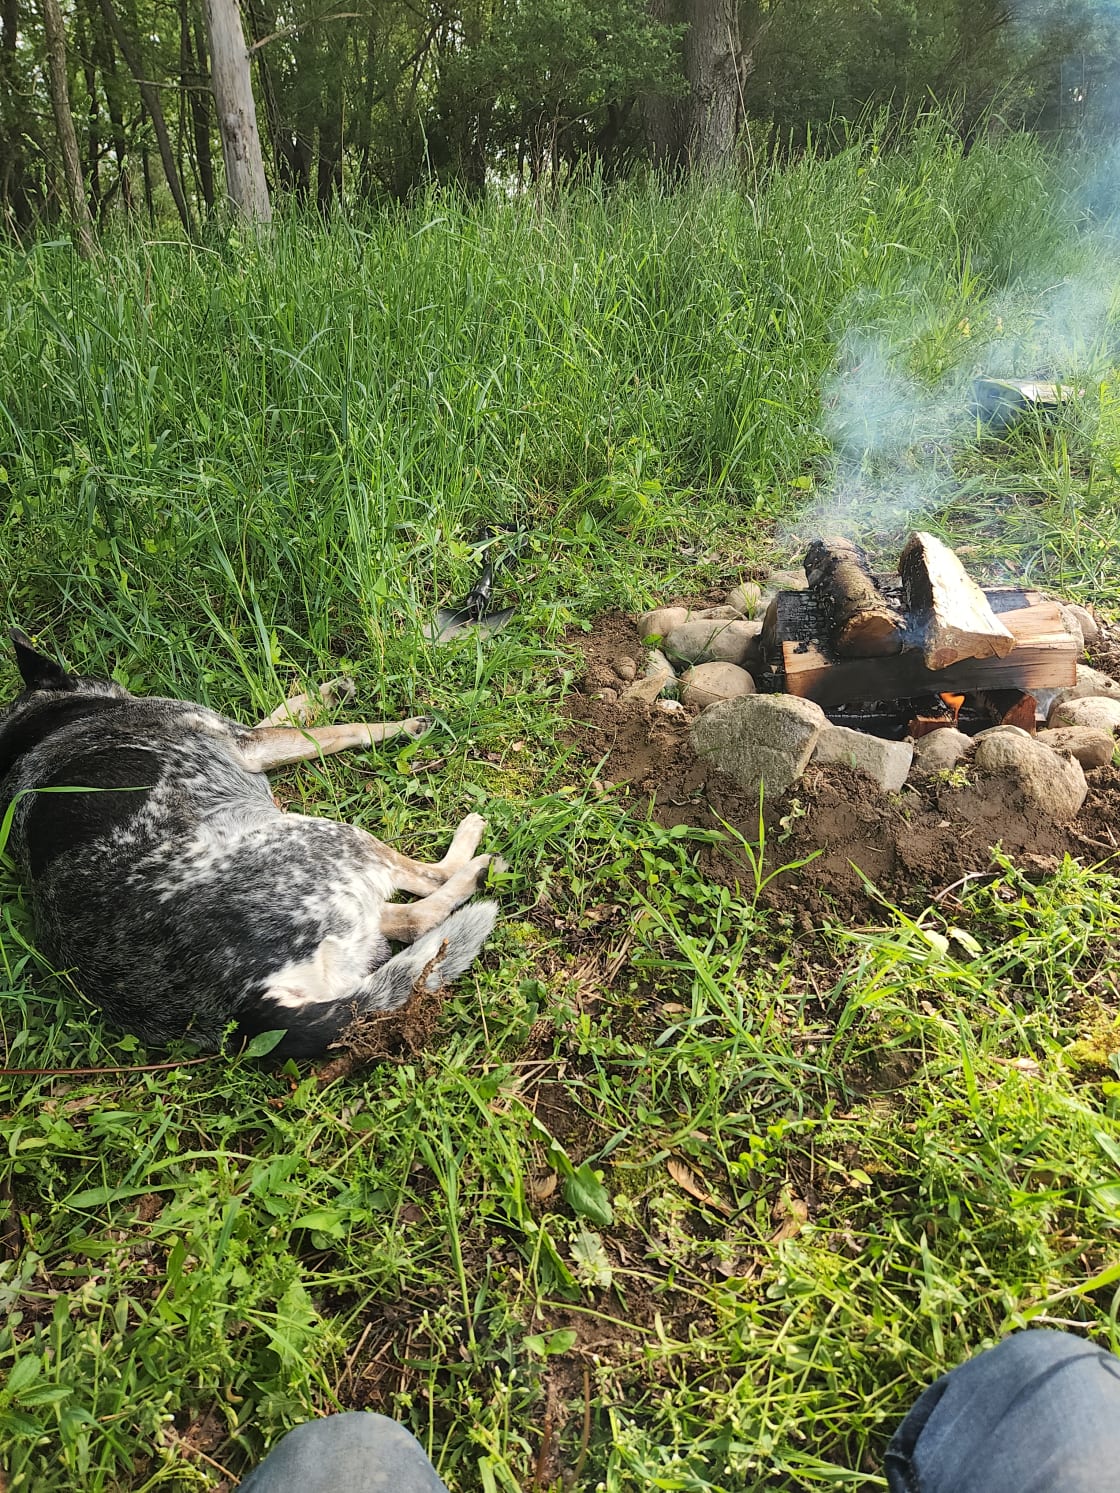 Cujo enjoying the warm fire. 